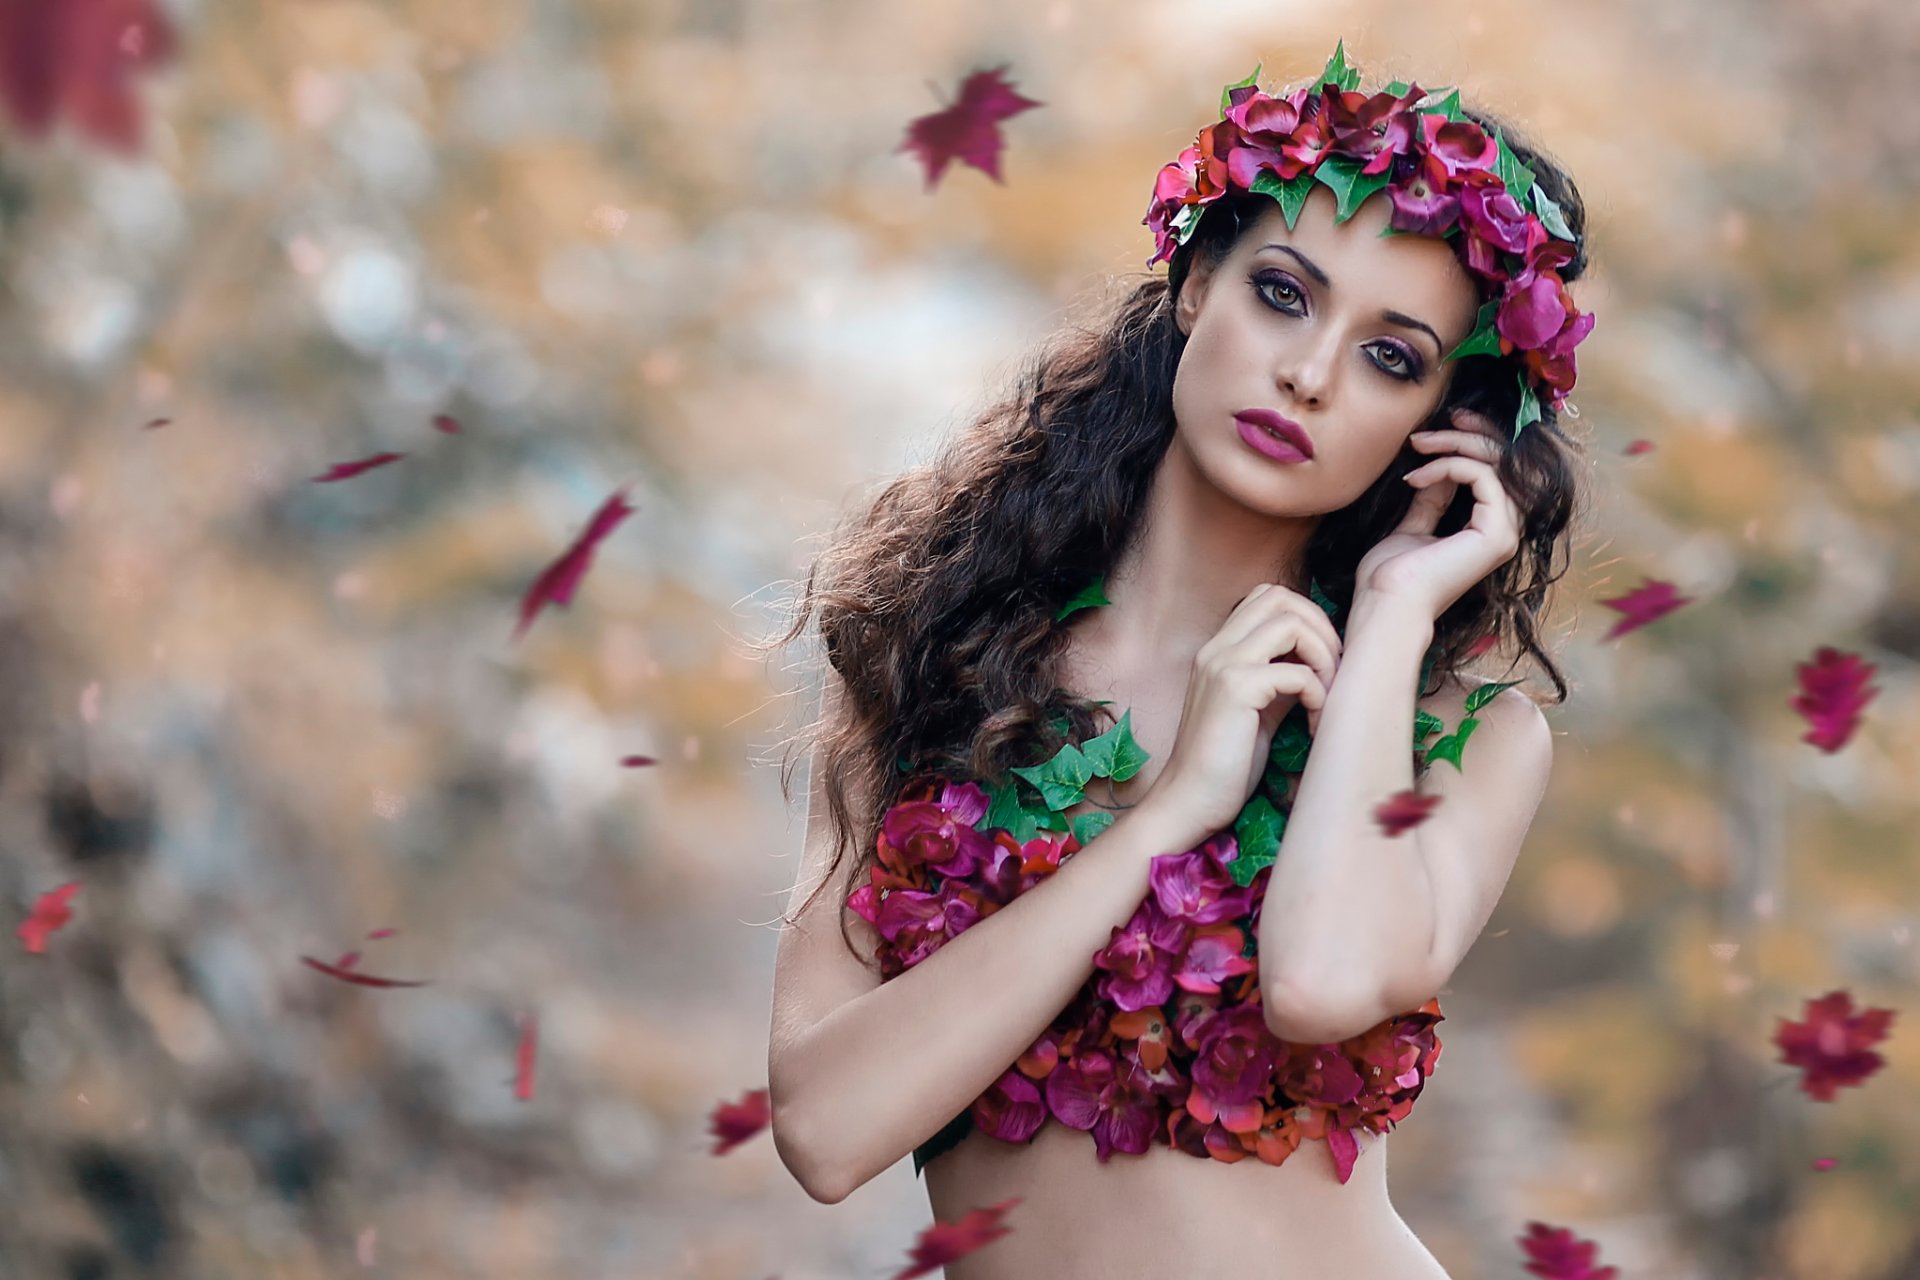 природа желание девушка венок листья осень алессандро ди чикко